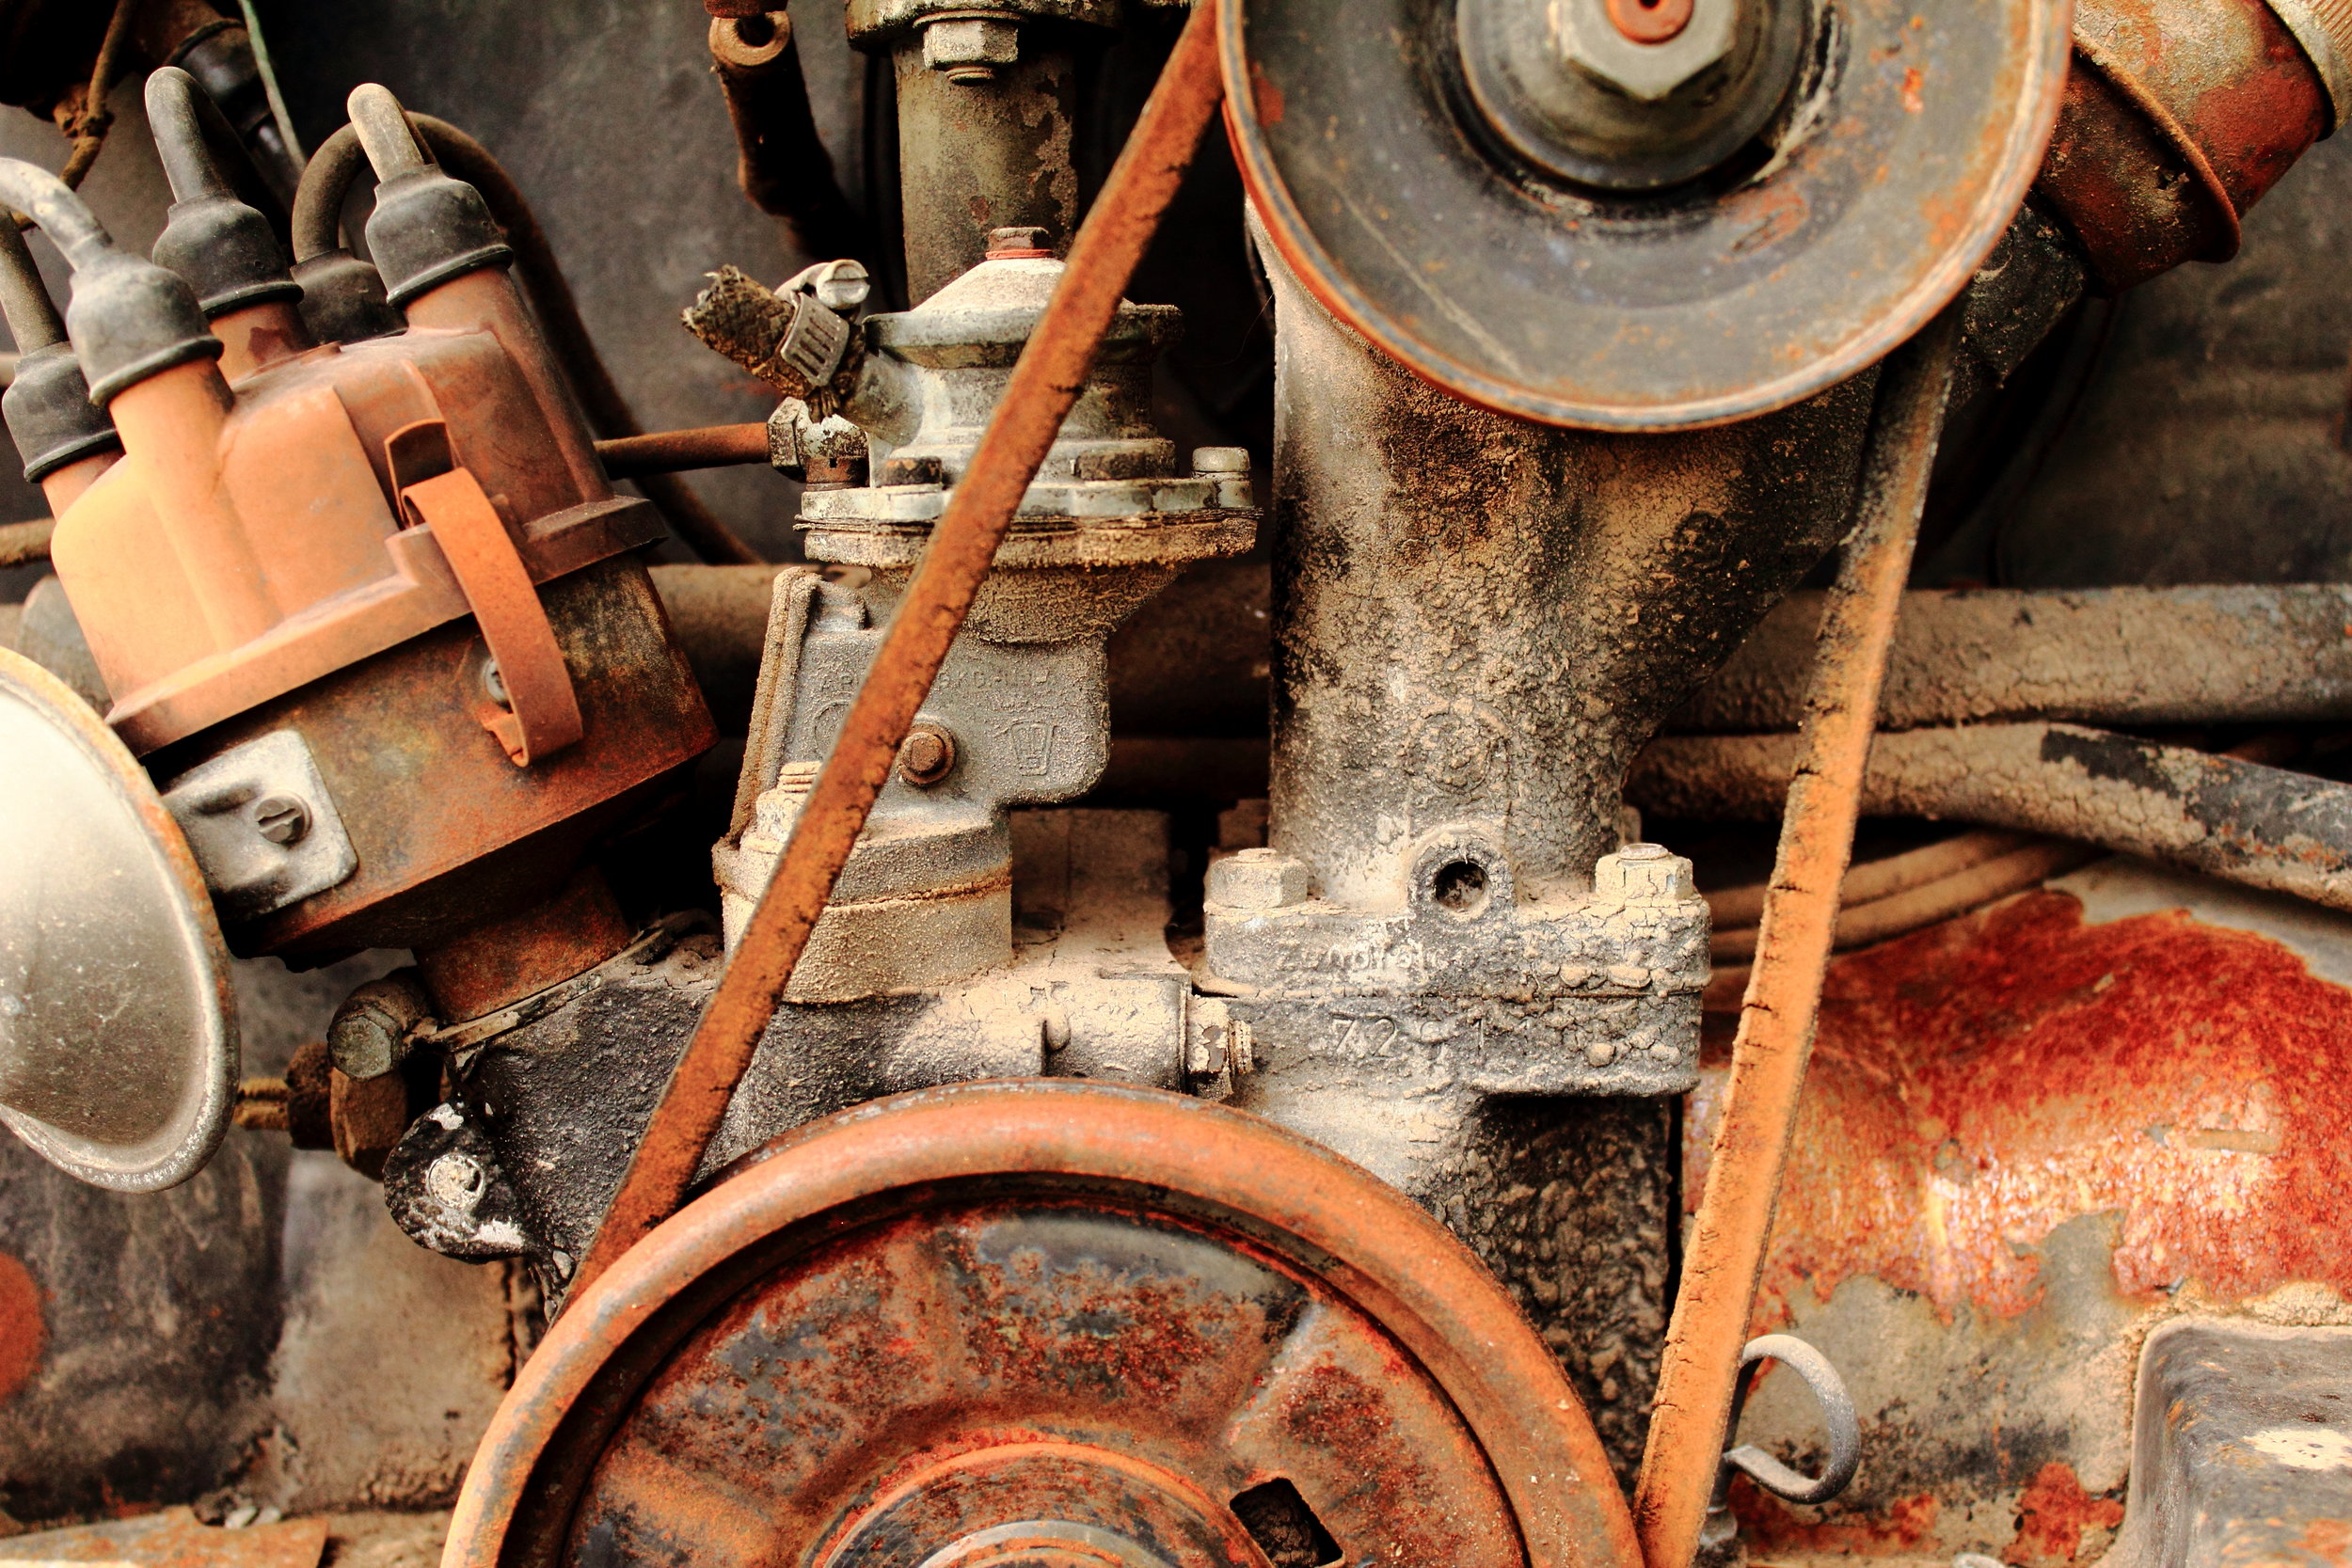 Rusty engine parts